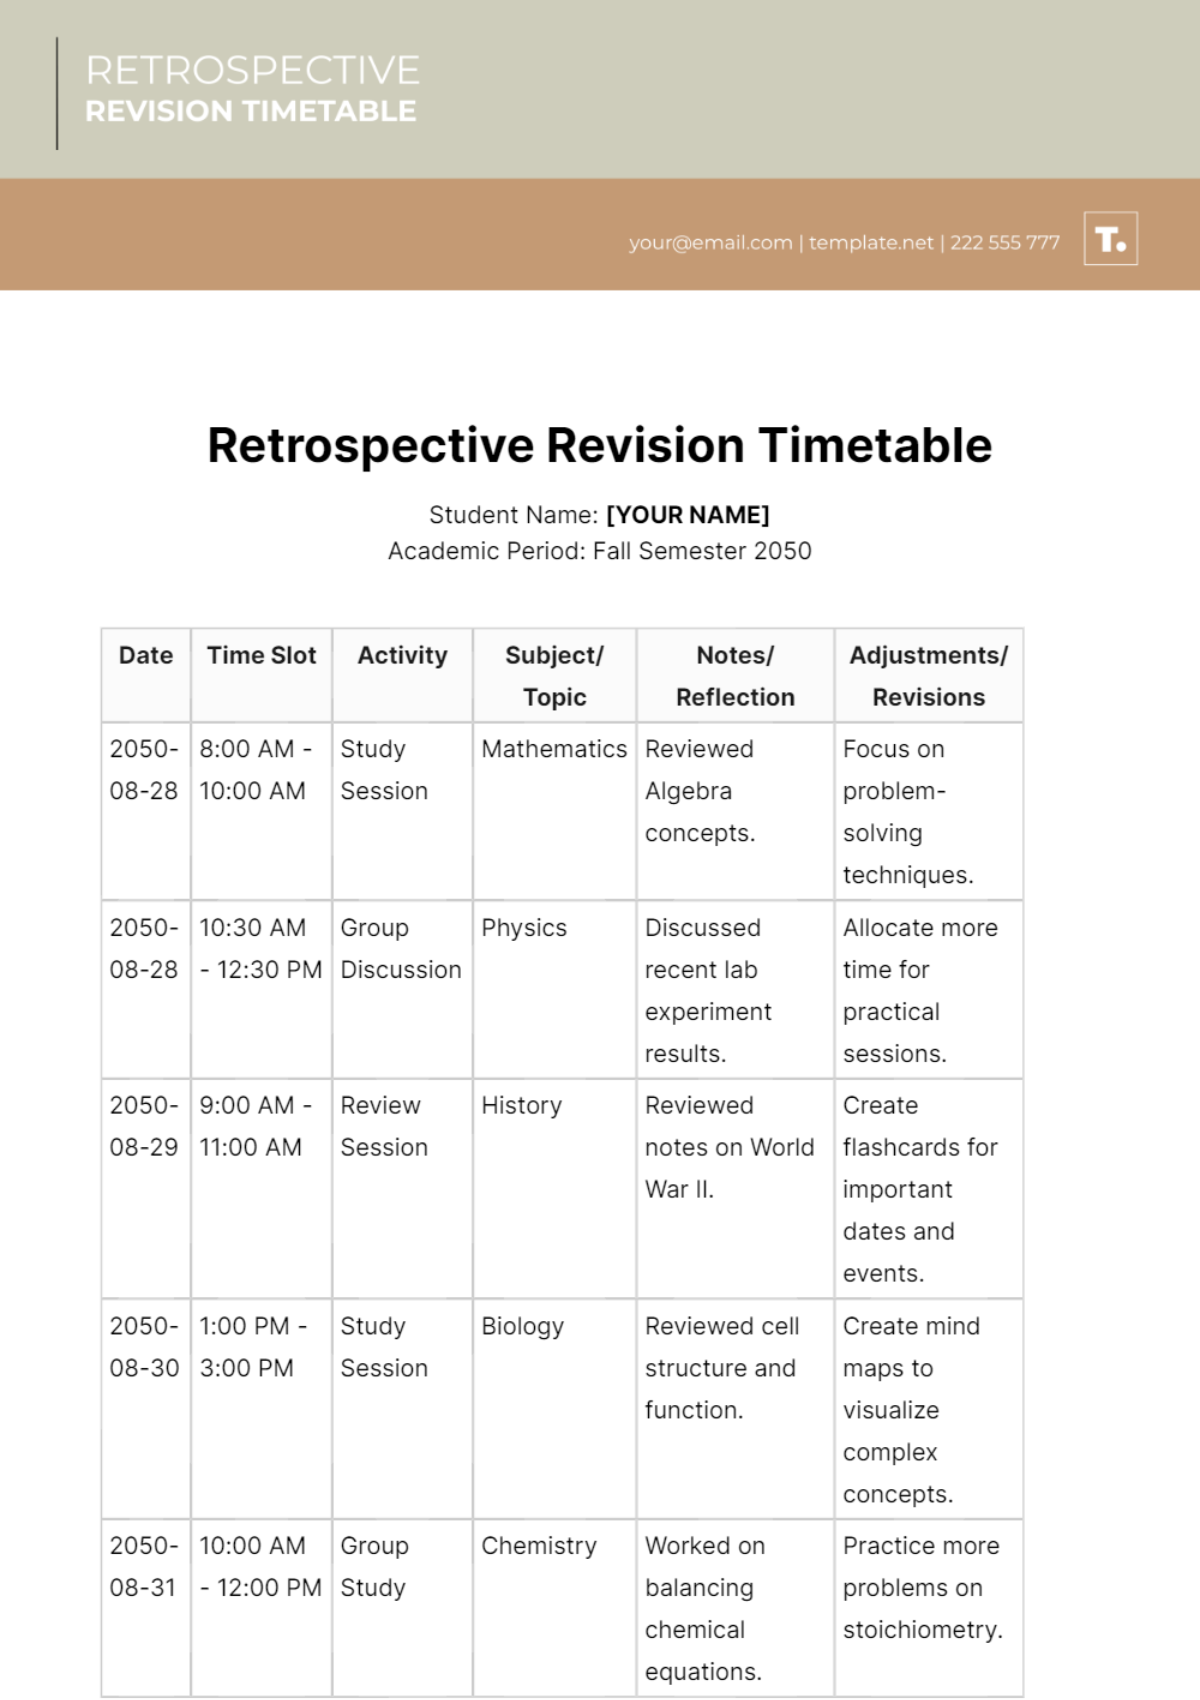 Retrospective Revision Timetable Template